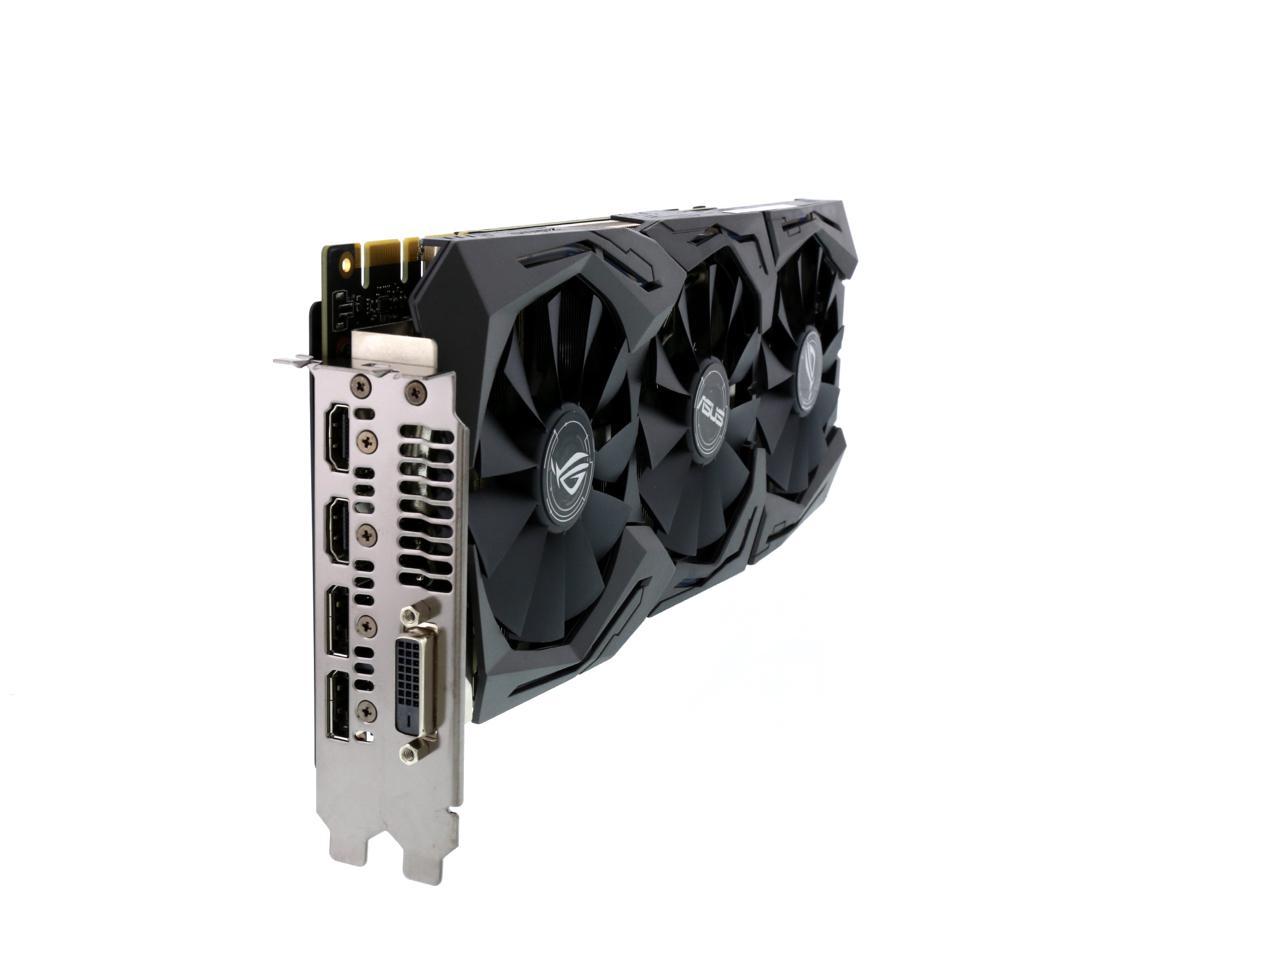 ASUS GeForce GTX 1070 Video Card STRIX-GTX1070-8G-GAMING - Newegg.com